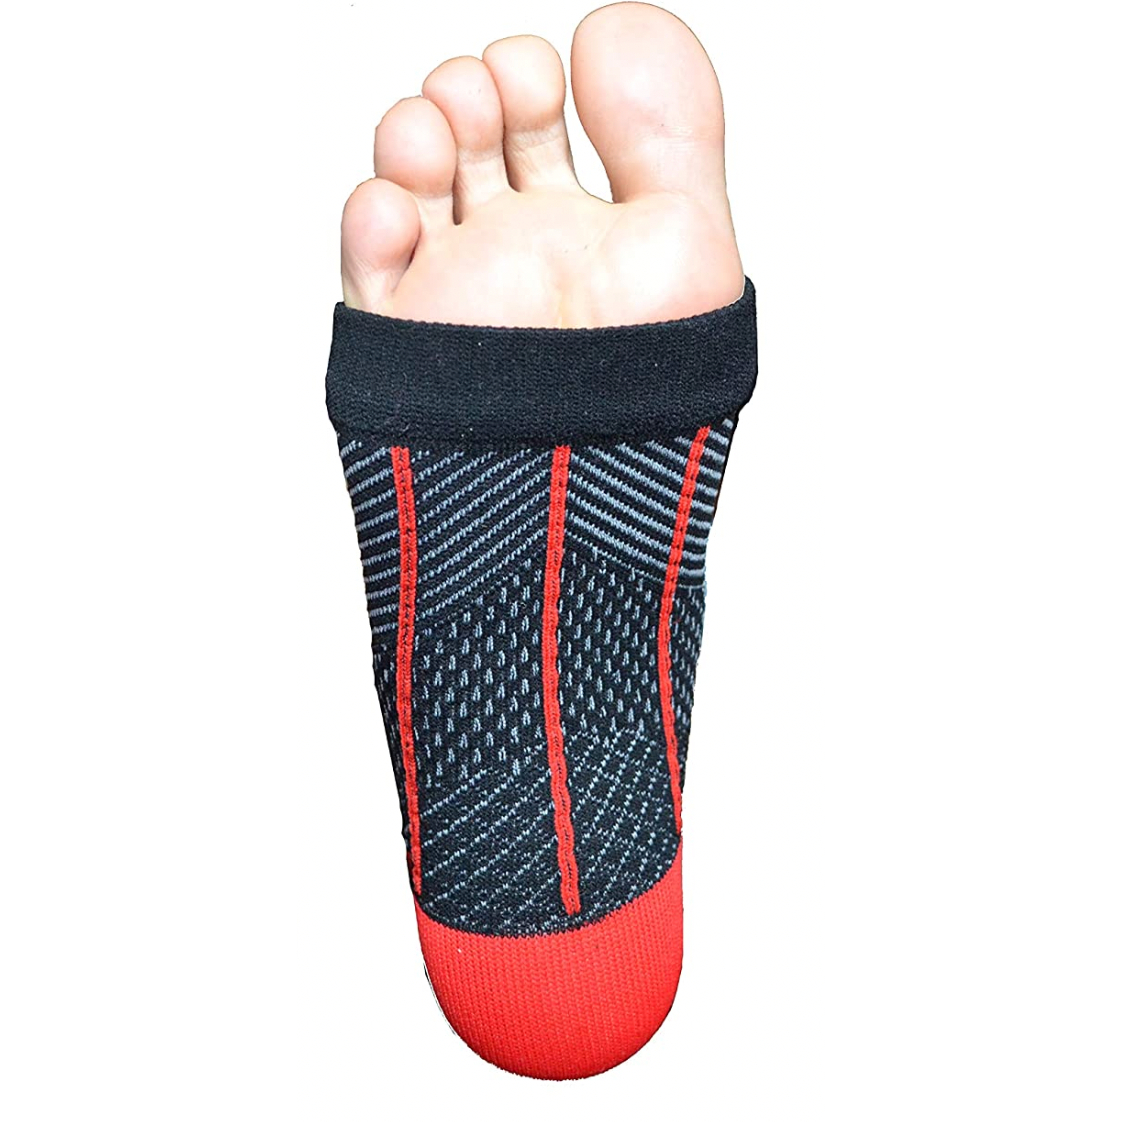 Healing foot pain - How to Choose Plantar Fasciitis Socks